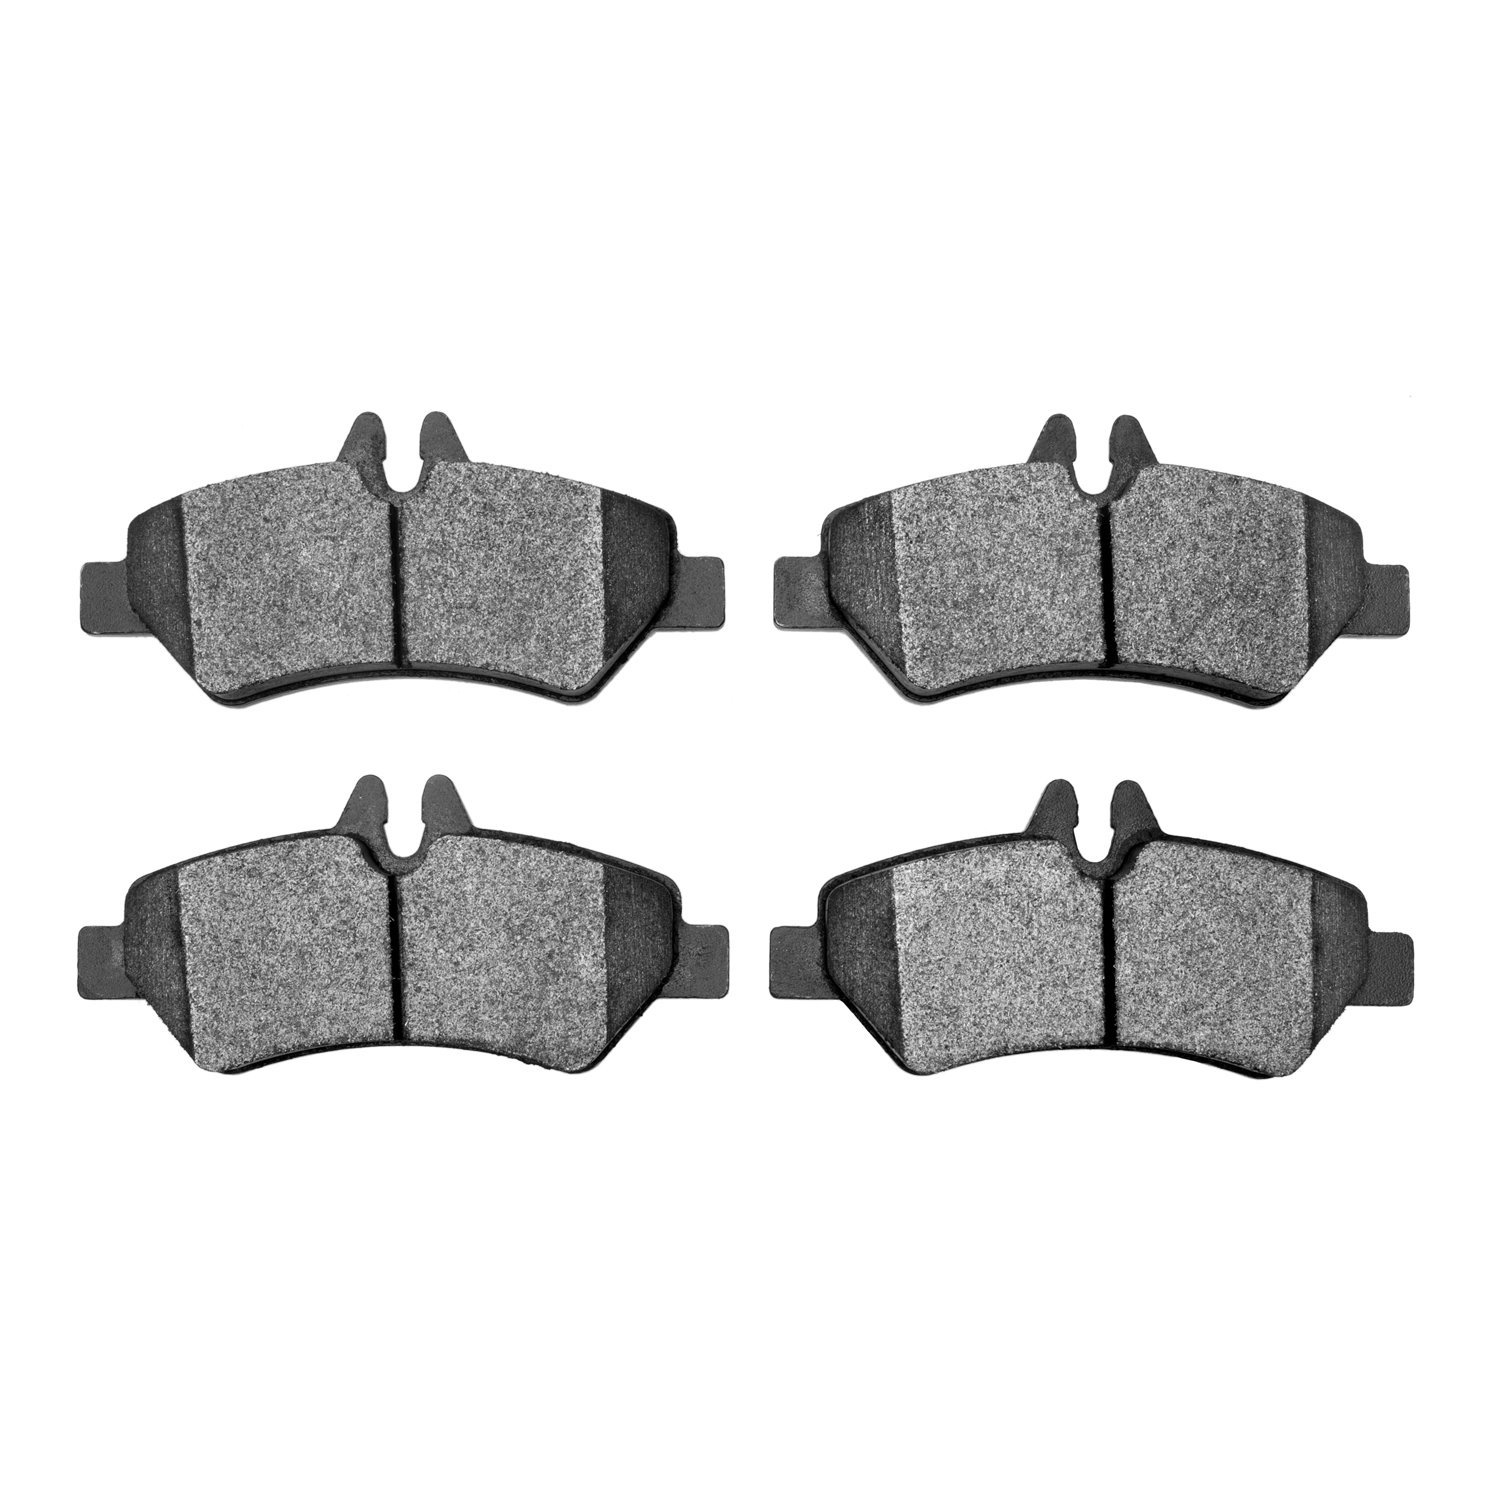 Semi-Metallic Brake Pads, 2006-2018 Fits Multiple Makes/Models, Position: Rear Right